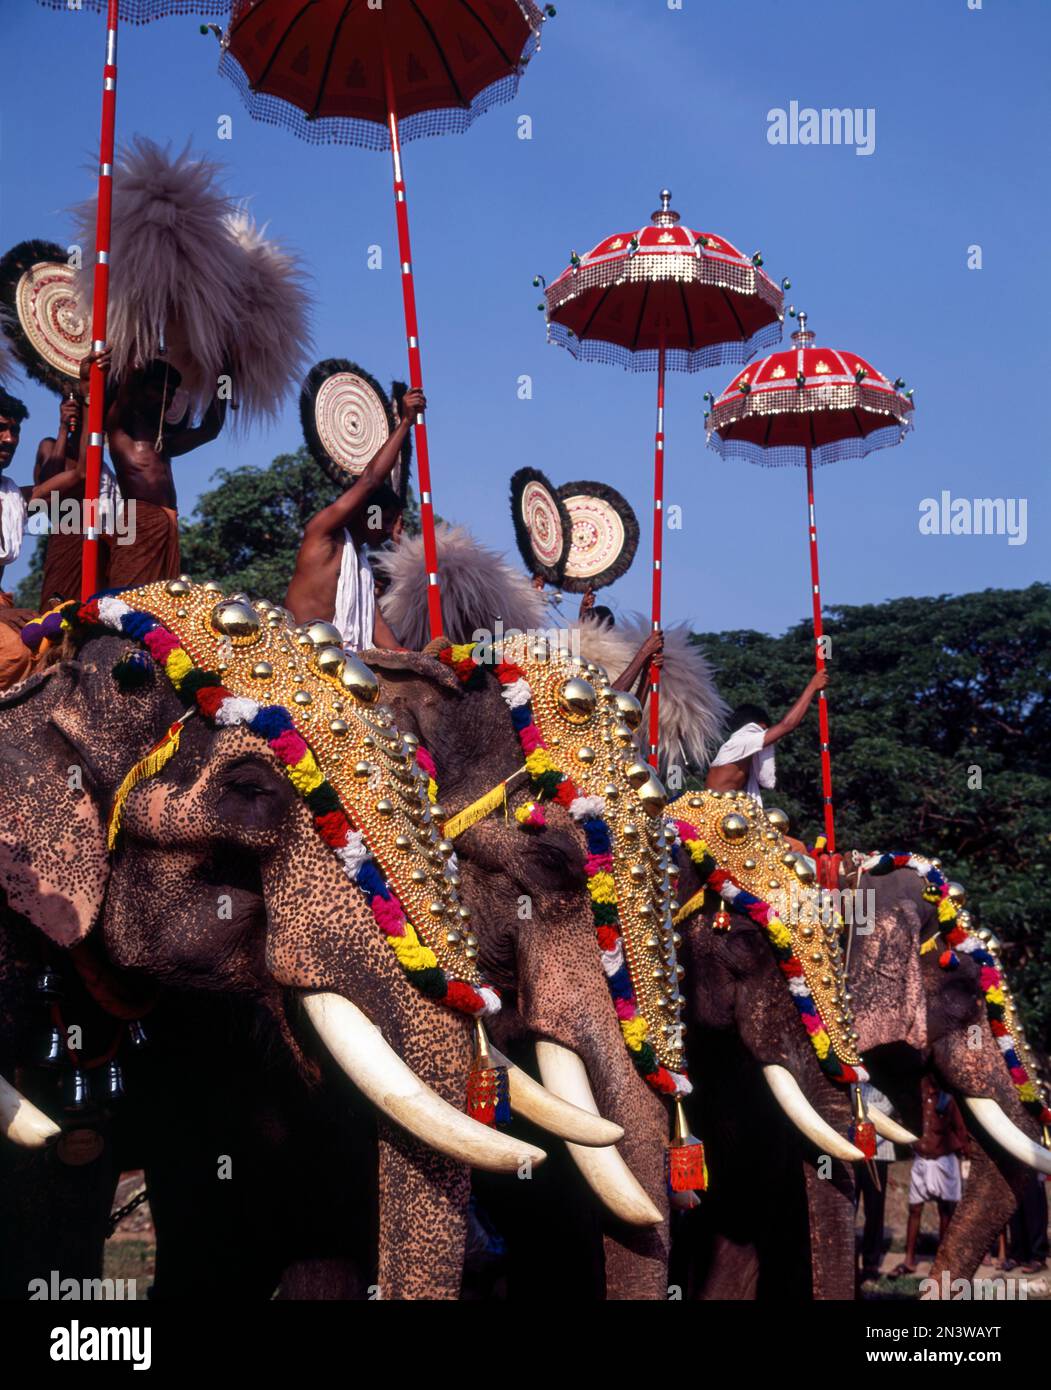 Caparisoned elephants in Pooram festival, Thrissur or Trichur, Kerala, India, Asia Stock Photo